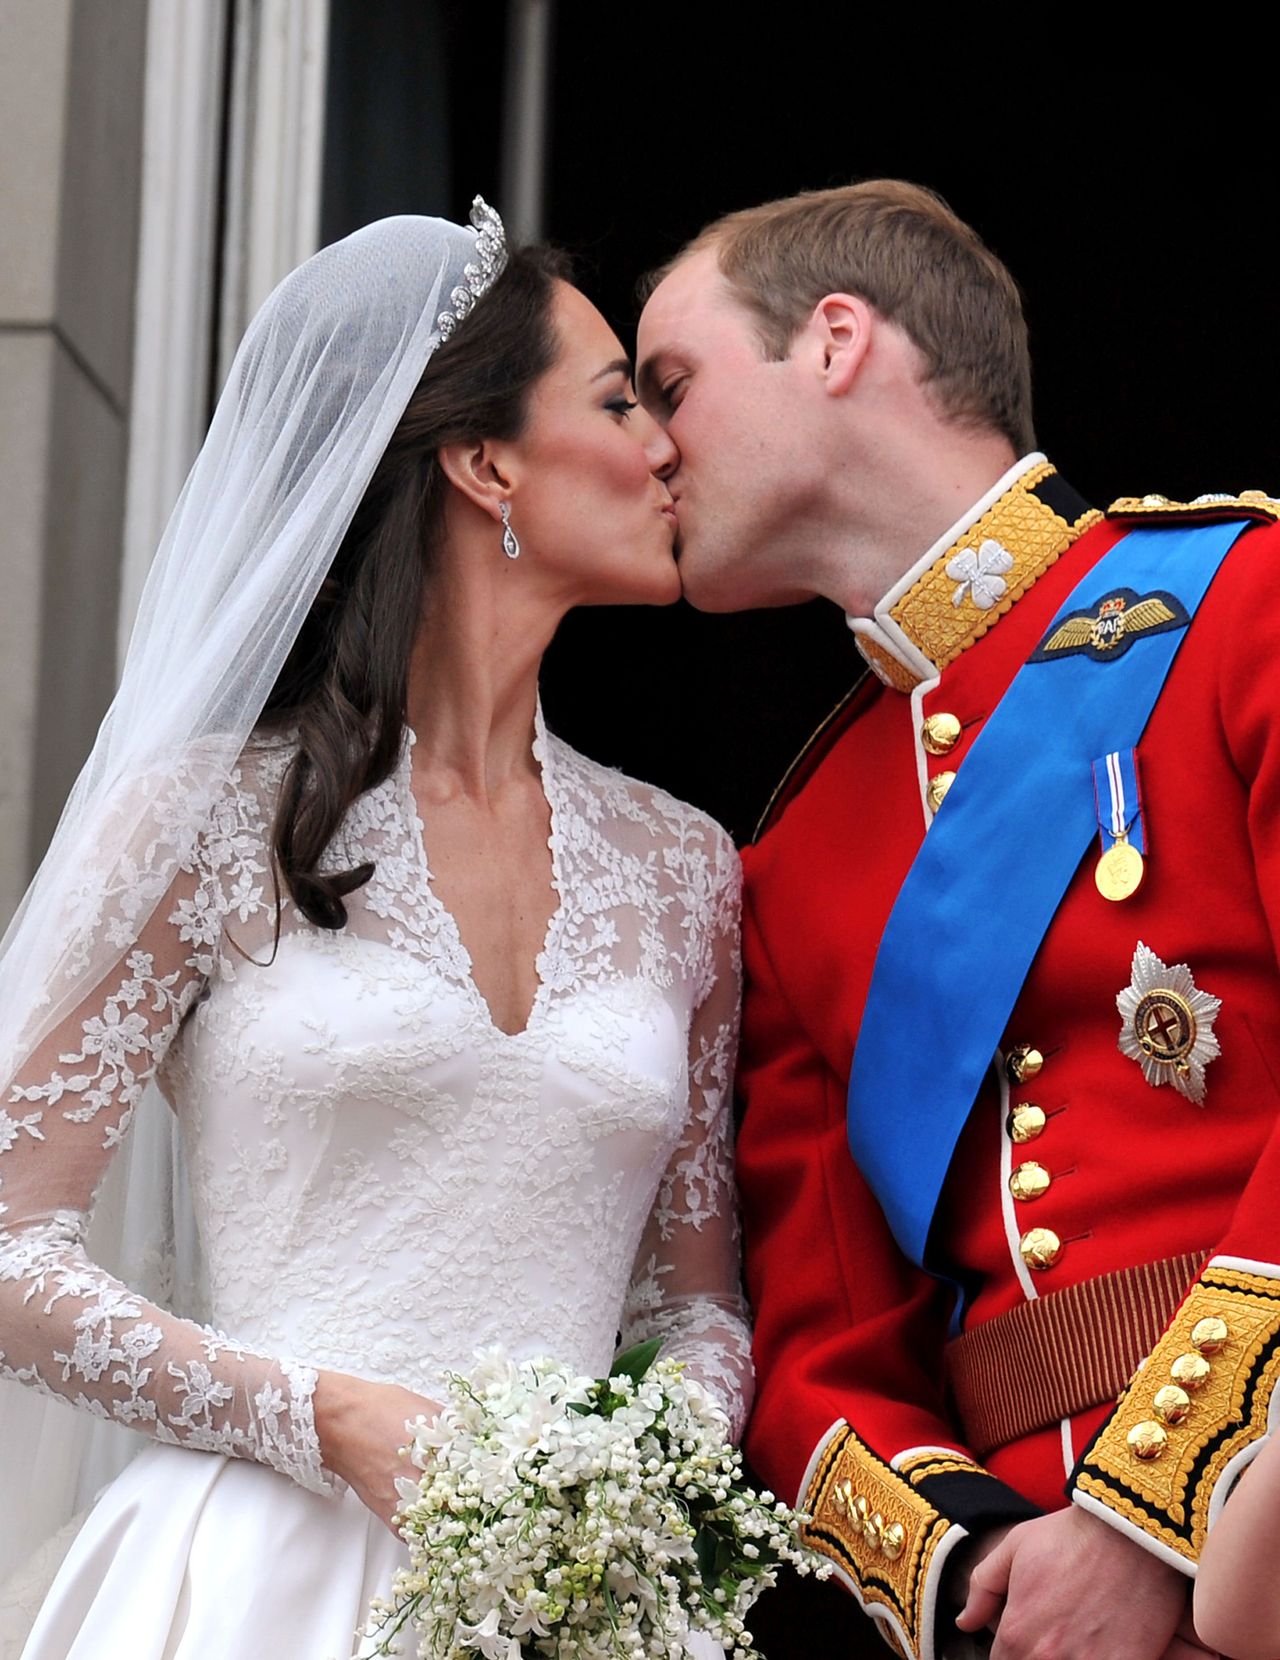 Prince William wore the Irish Guards uniform to his 2011 wedding 